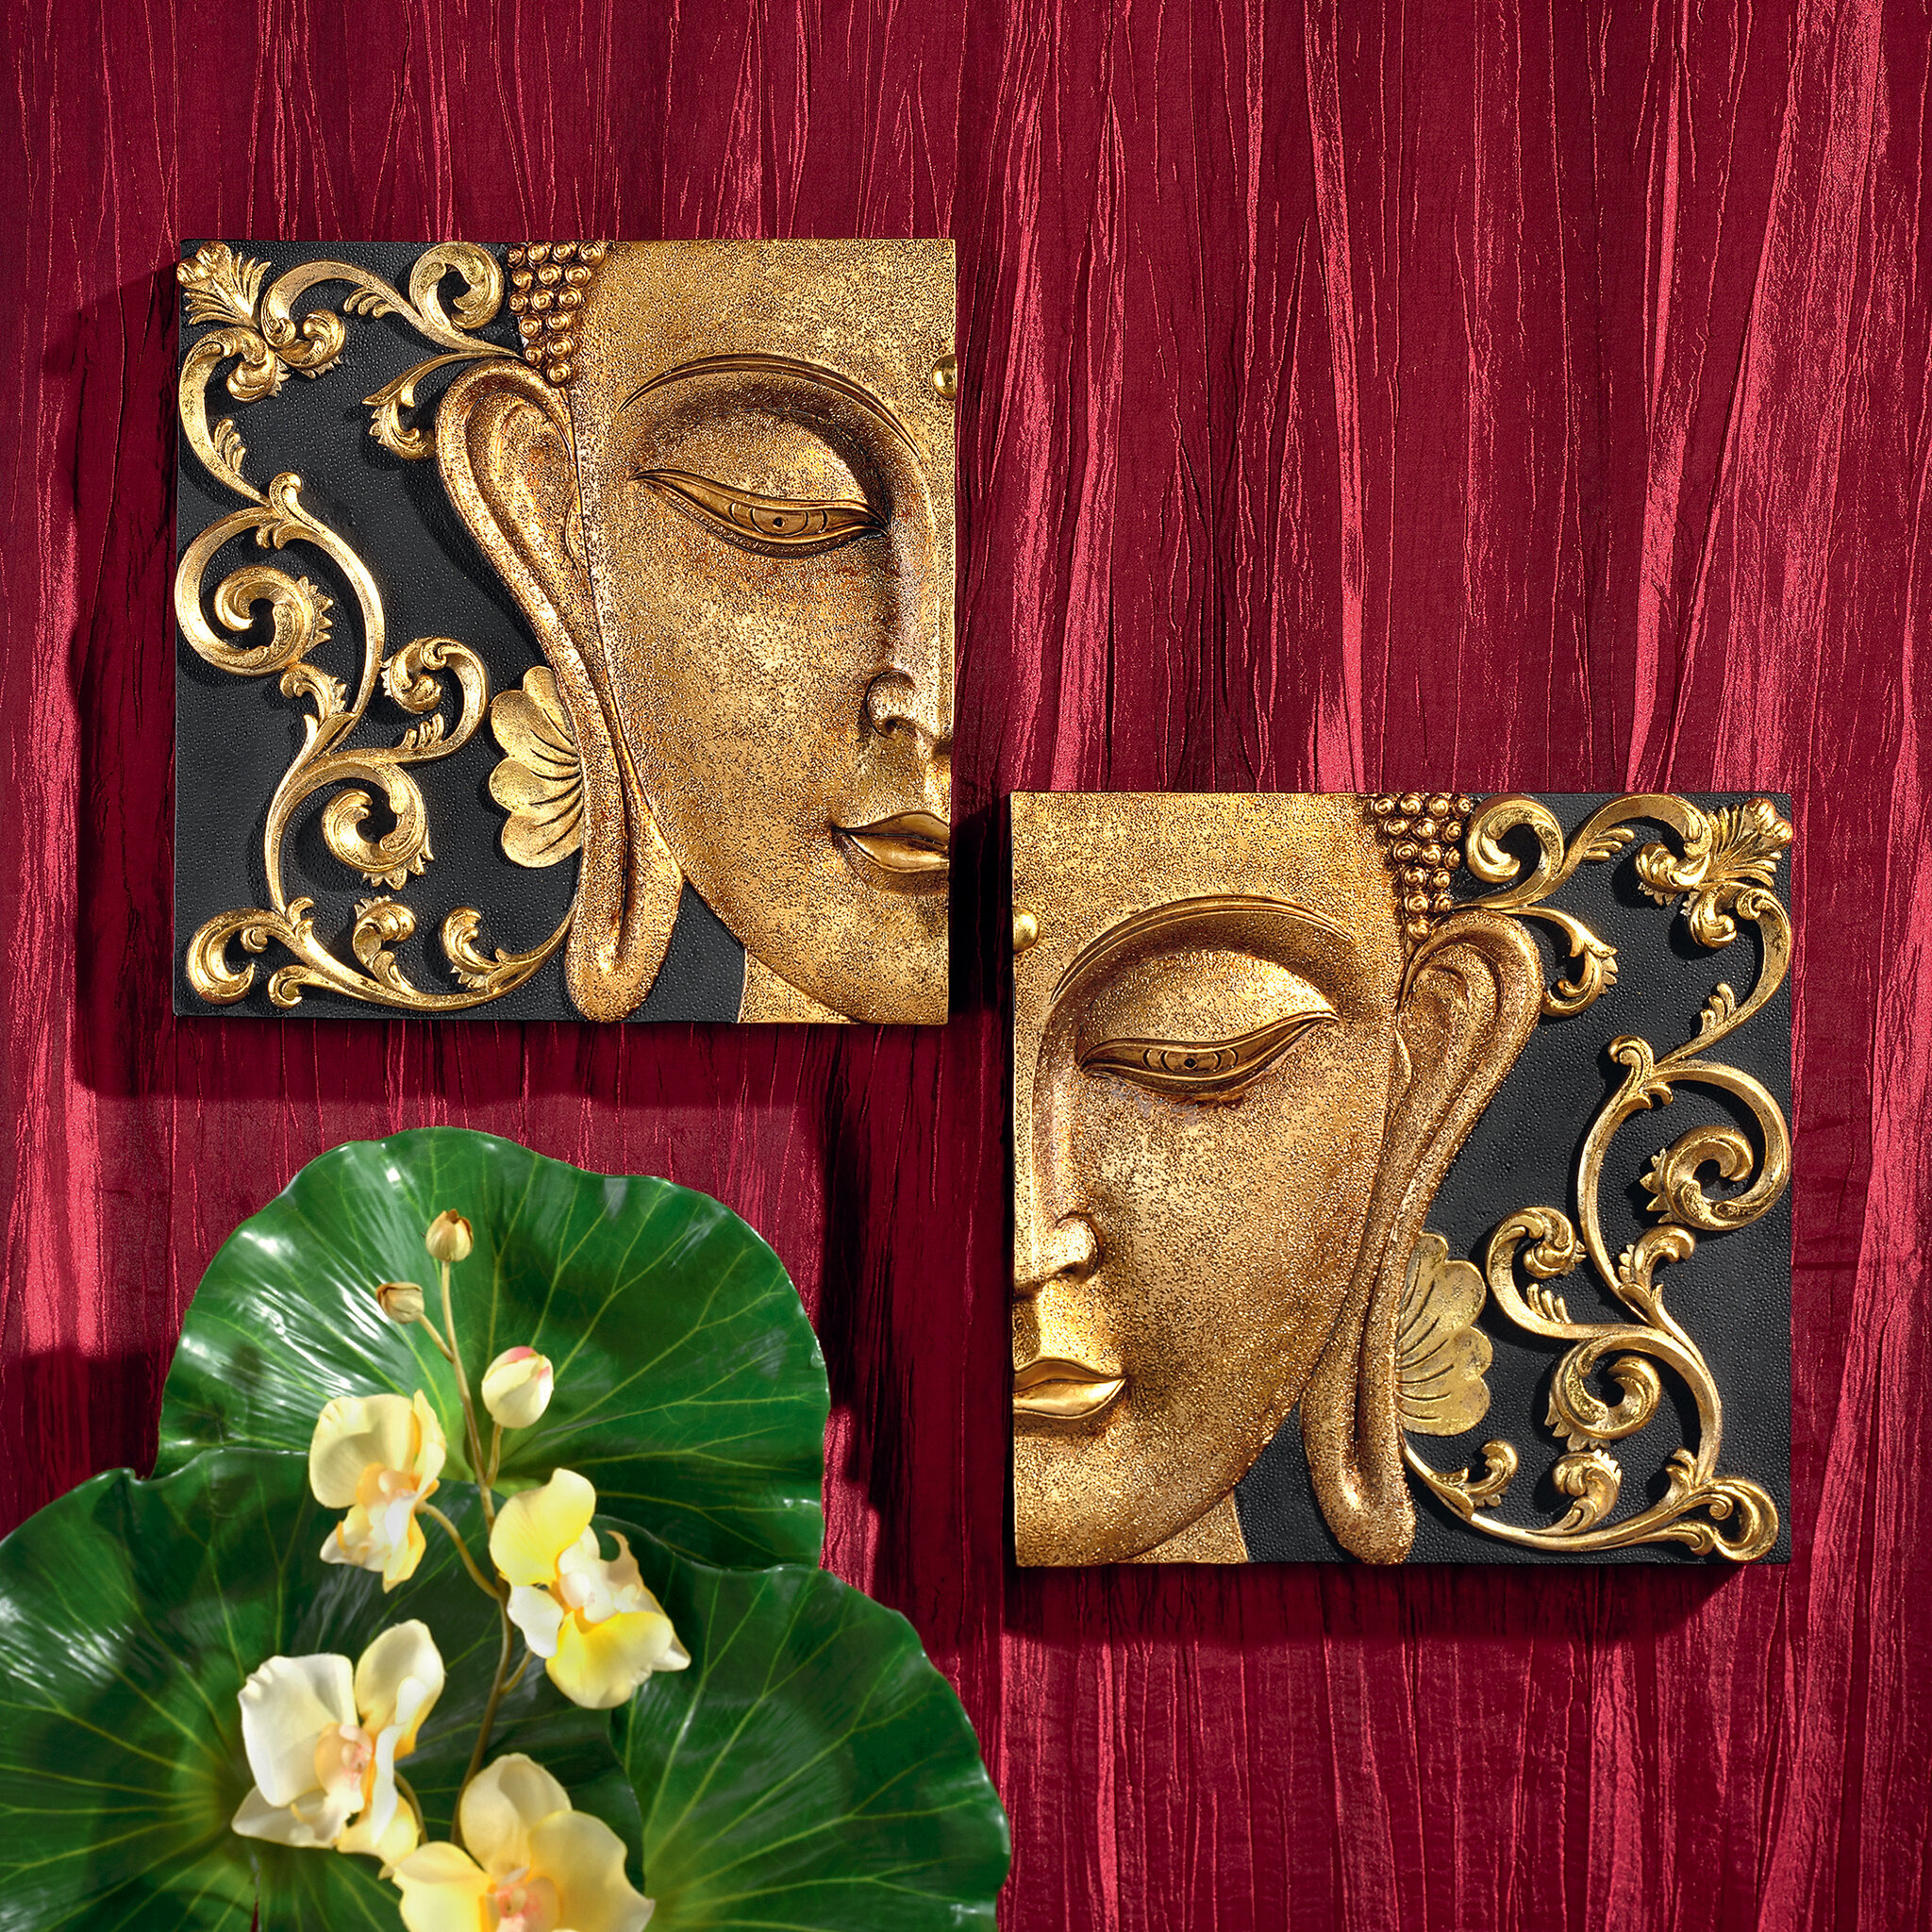 Metal Sign meditate Buddha quote metallic decorative tin wall door plaque gift